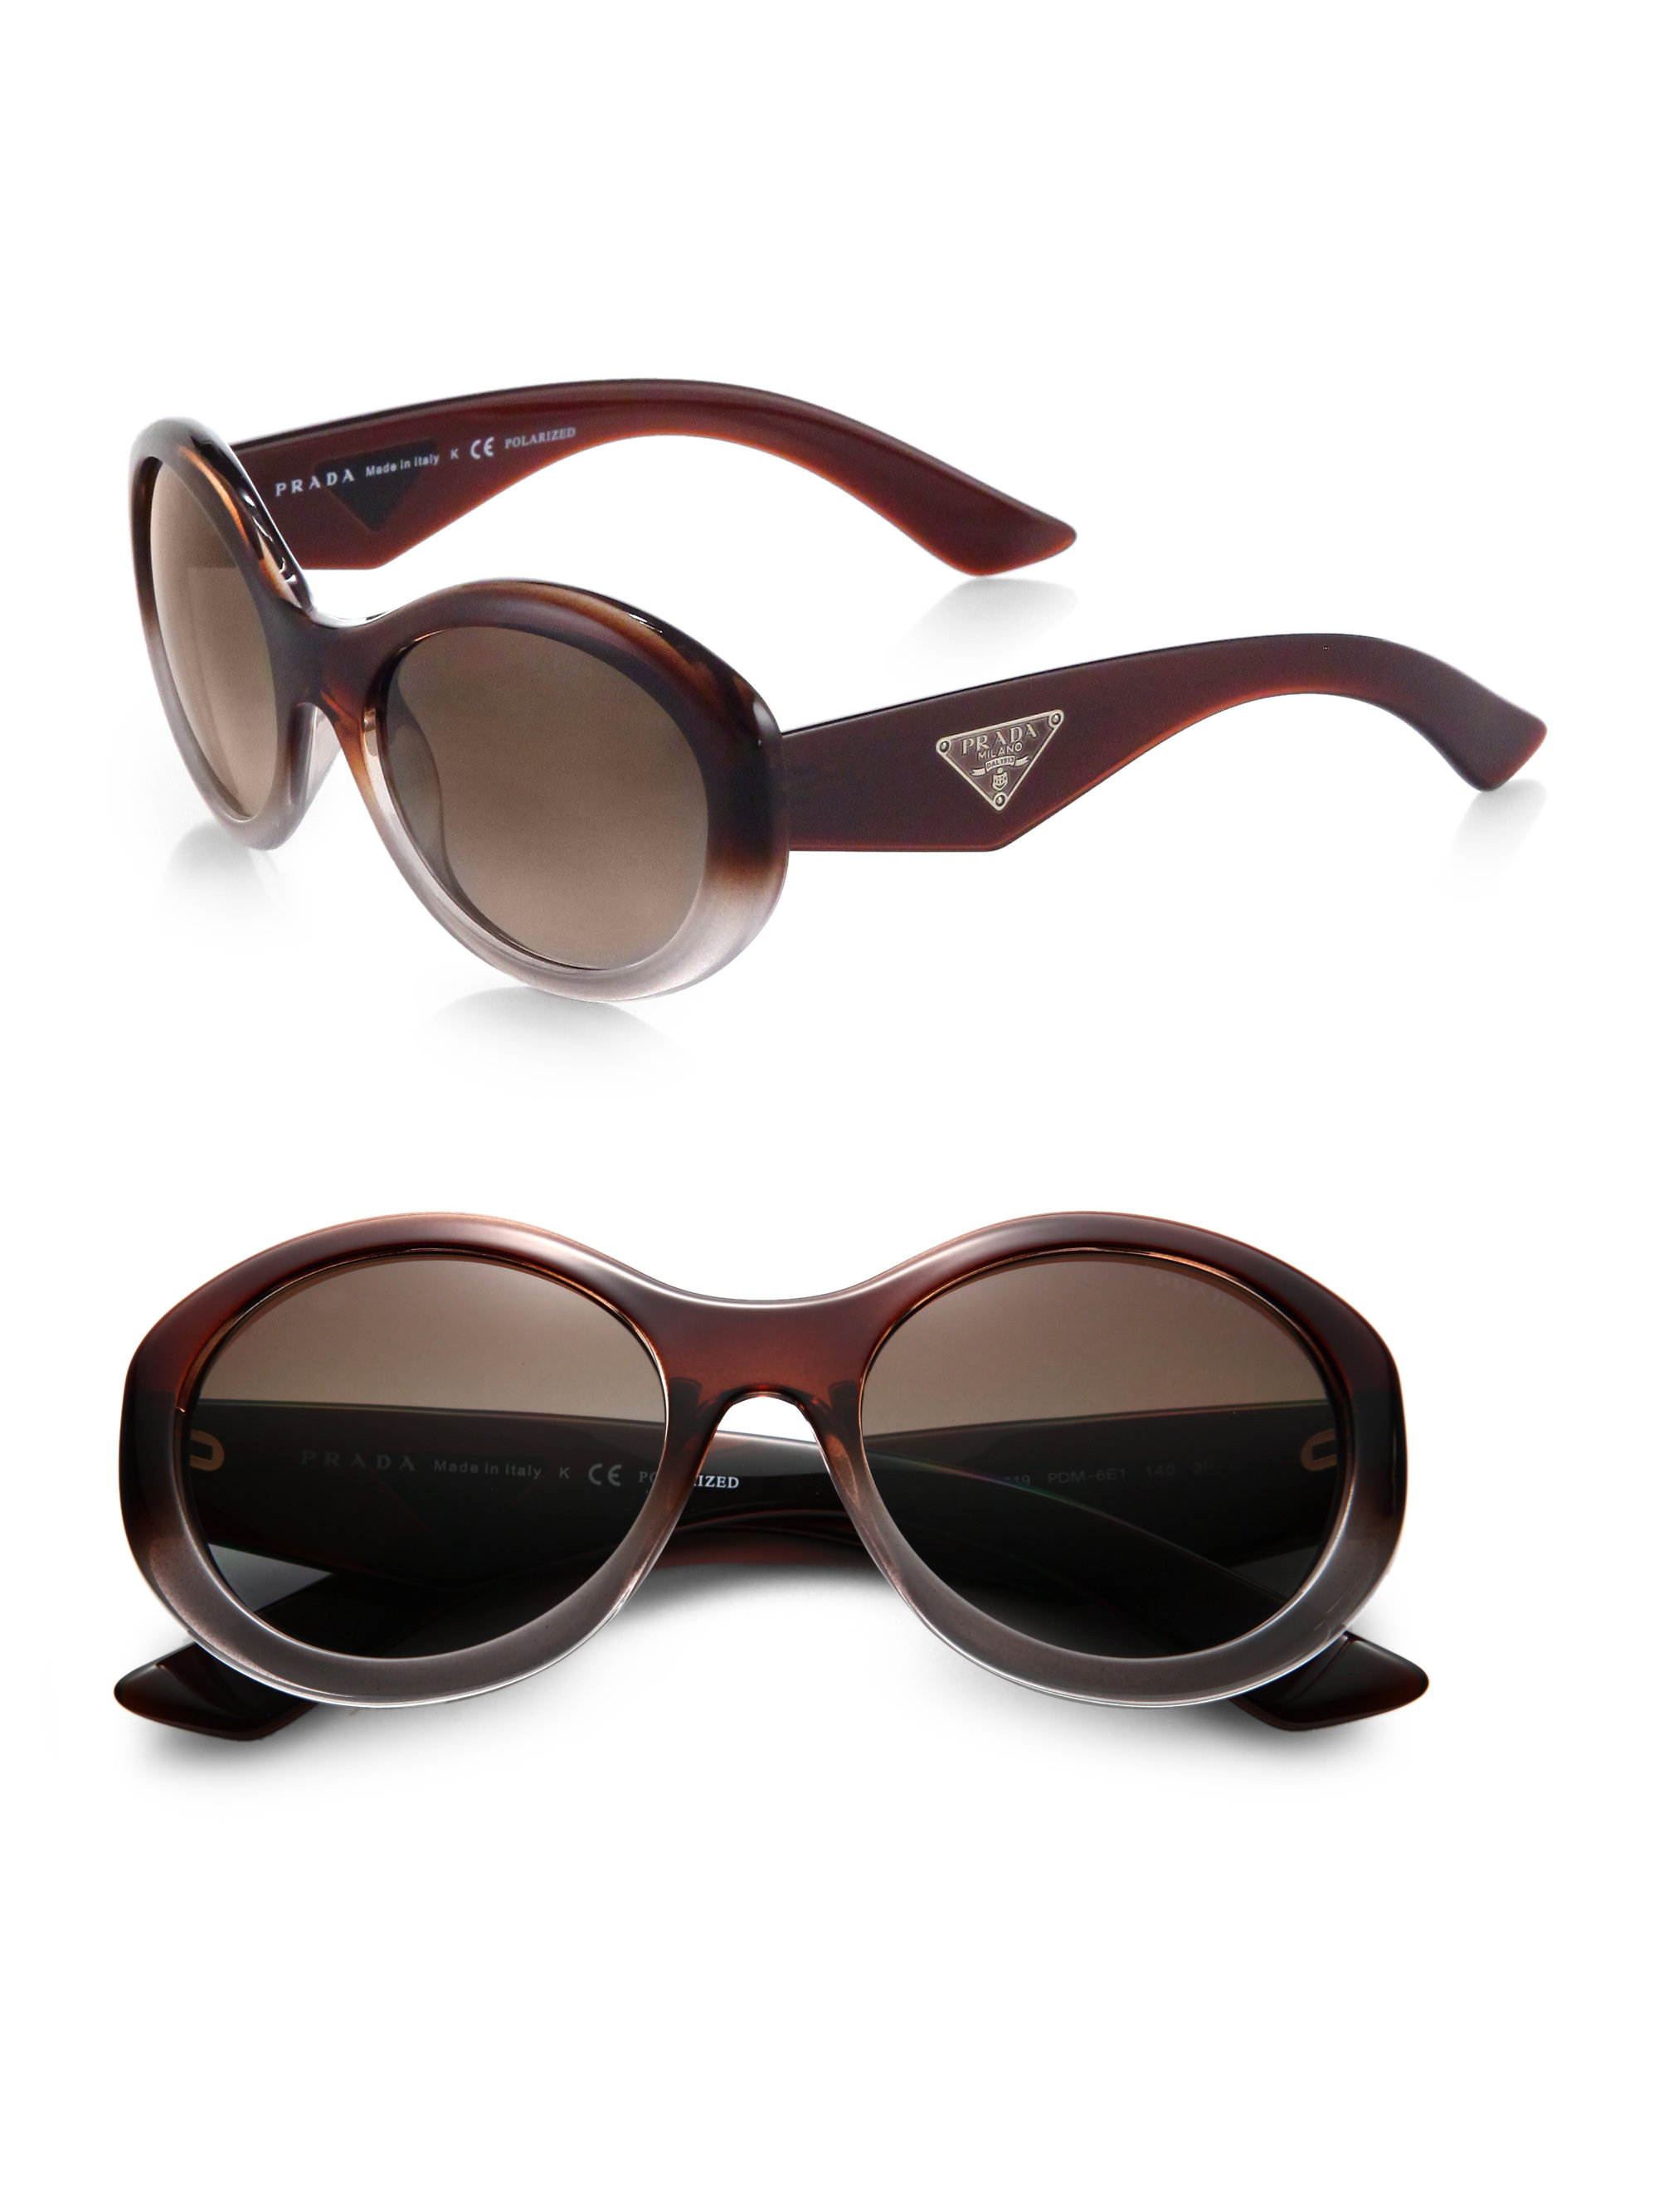 Lyst - Prada Oval Glam Sunglasses in Brown